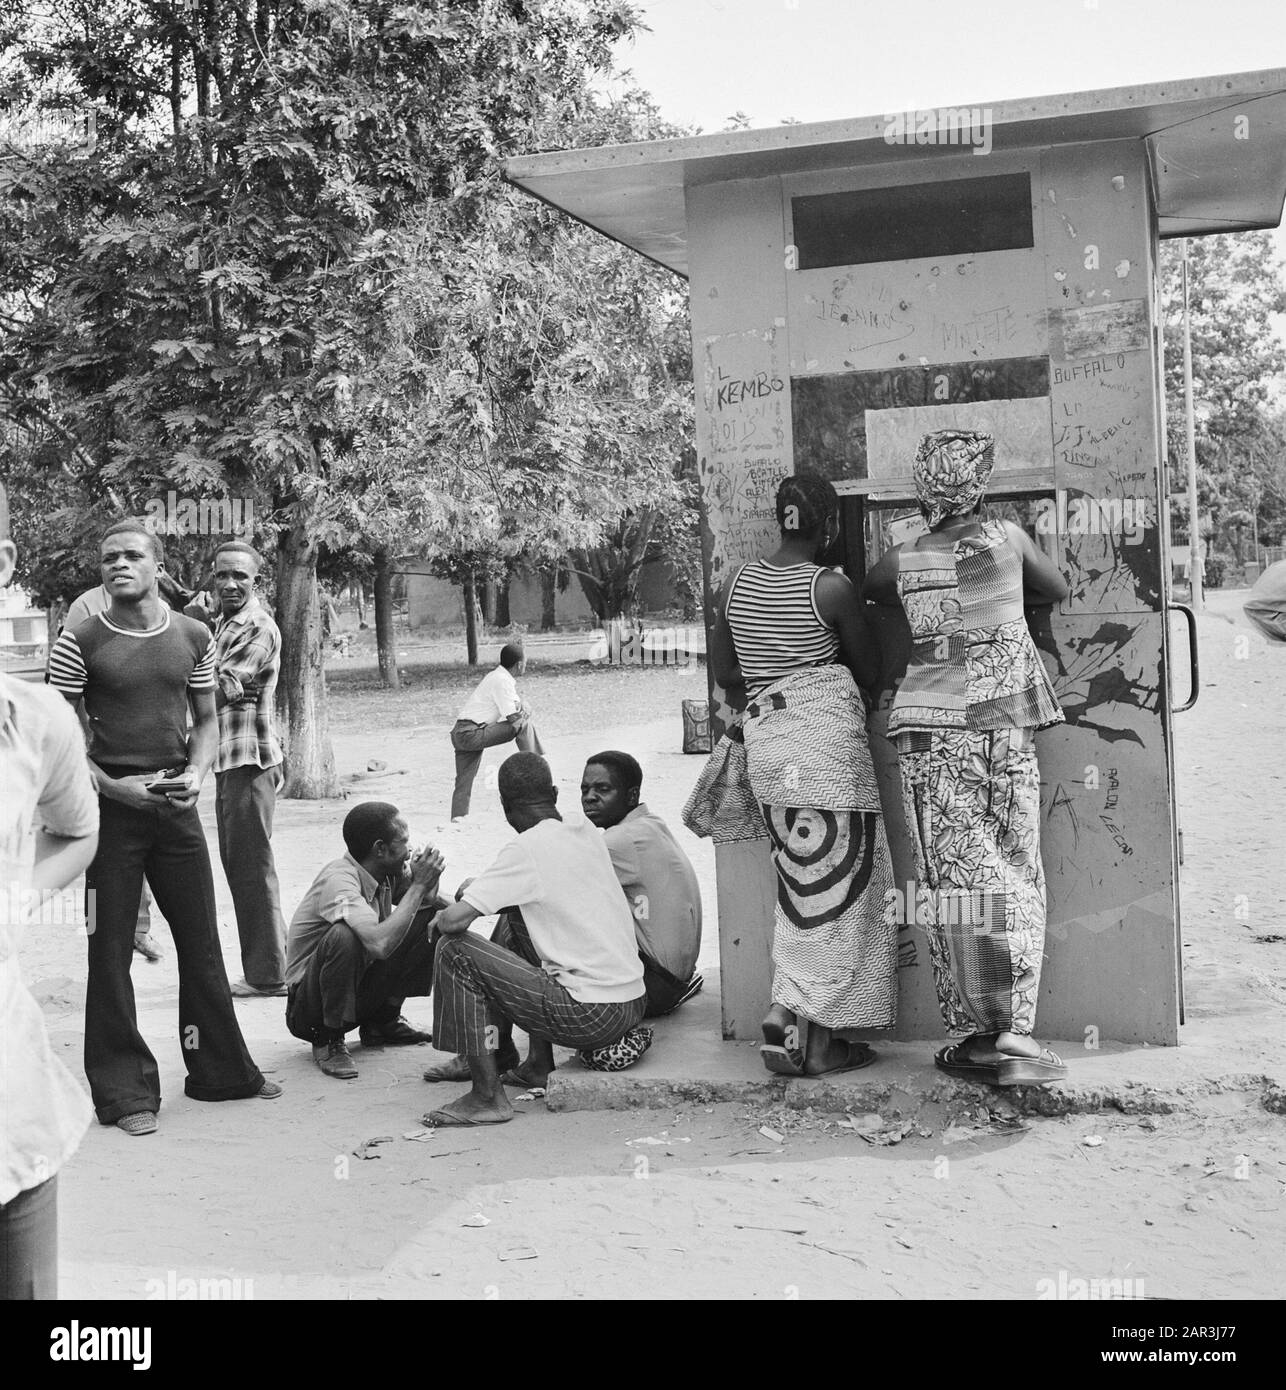 Zaire (ehemals Belgischer Kongo) Streetscape in Kinshasa Datum: 24. Oktober 1973 Ort: Kongo, Kinshasa, Zaire Schlüsselwörter: Kongolesen, Stadtansichten Stockfoto